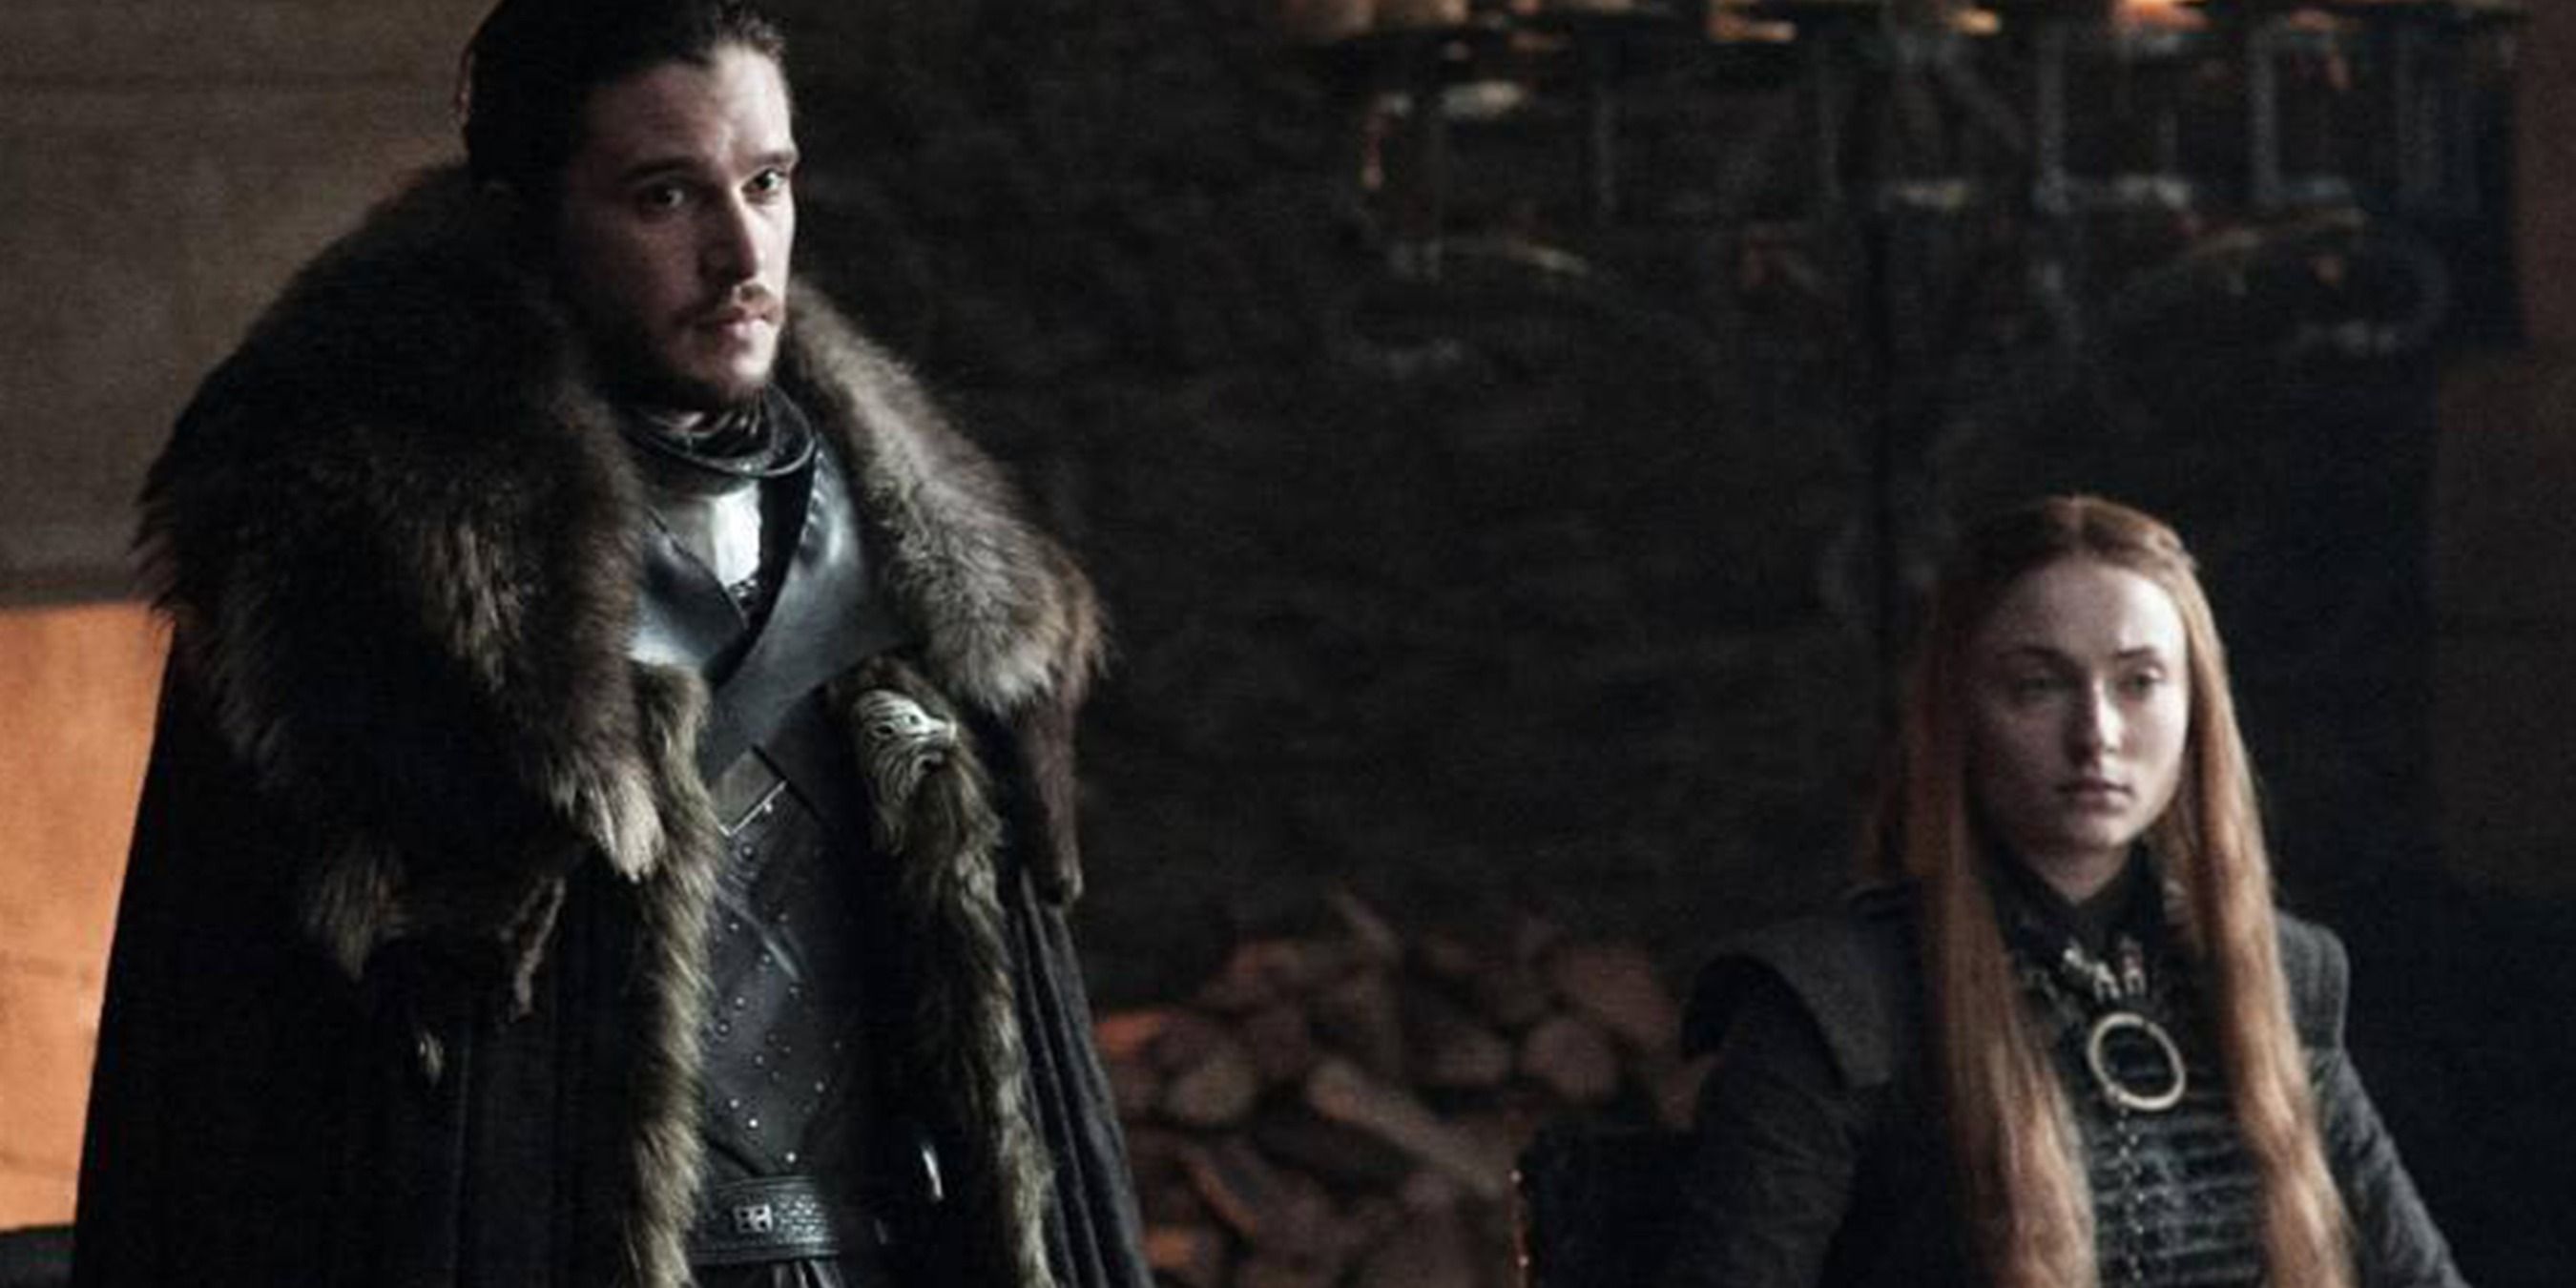 Jon Snow stands and Sansa Stark sits in Winterfell